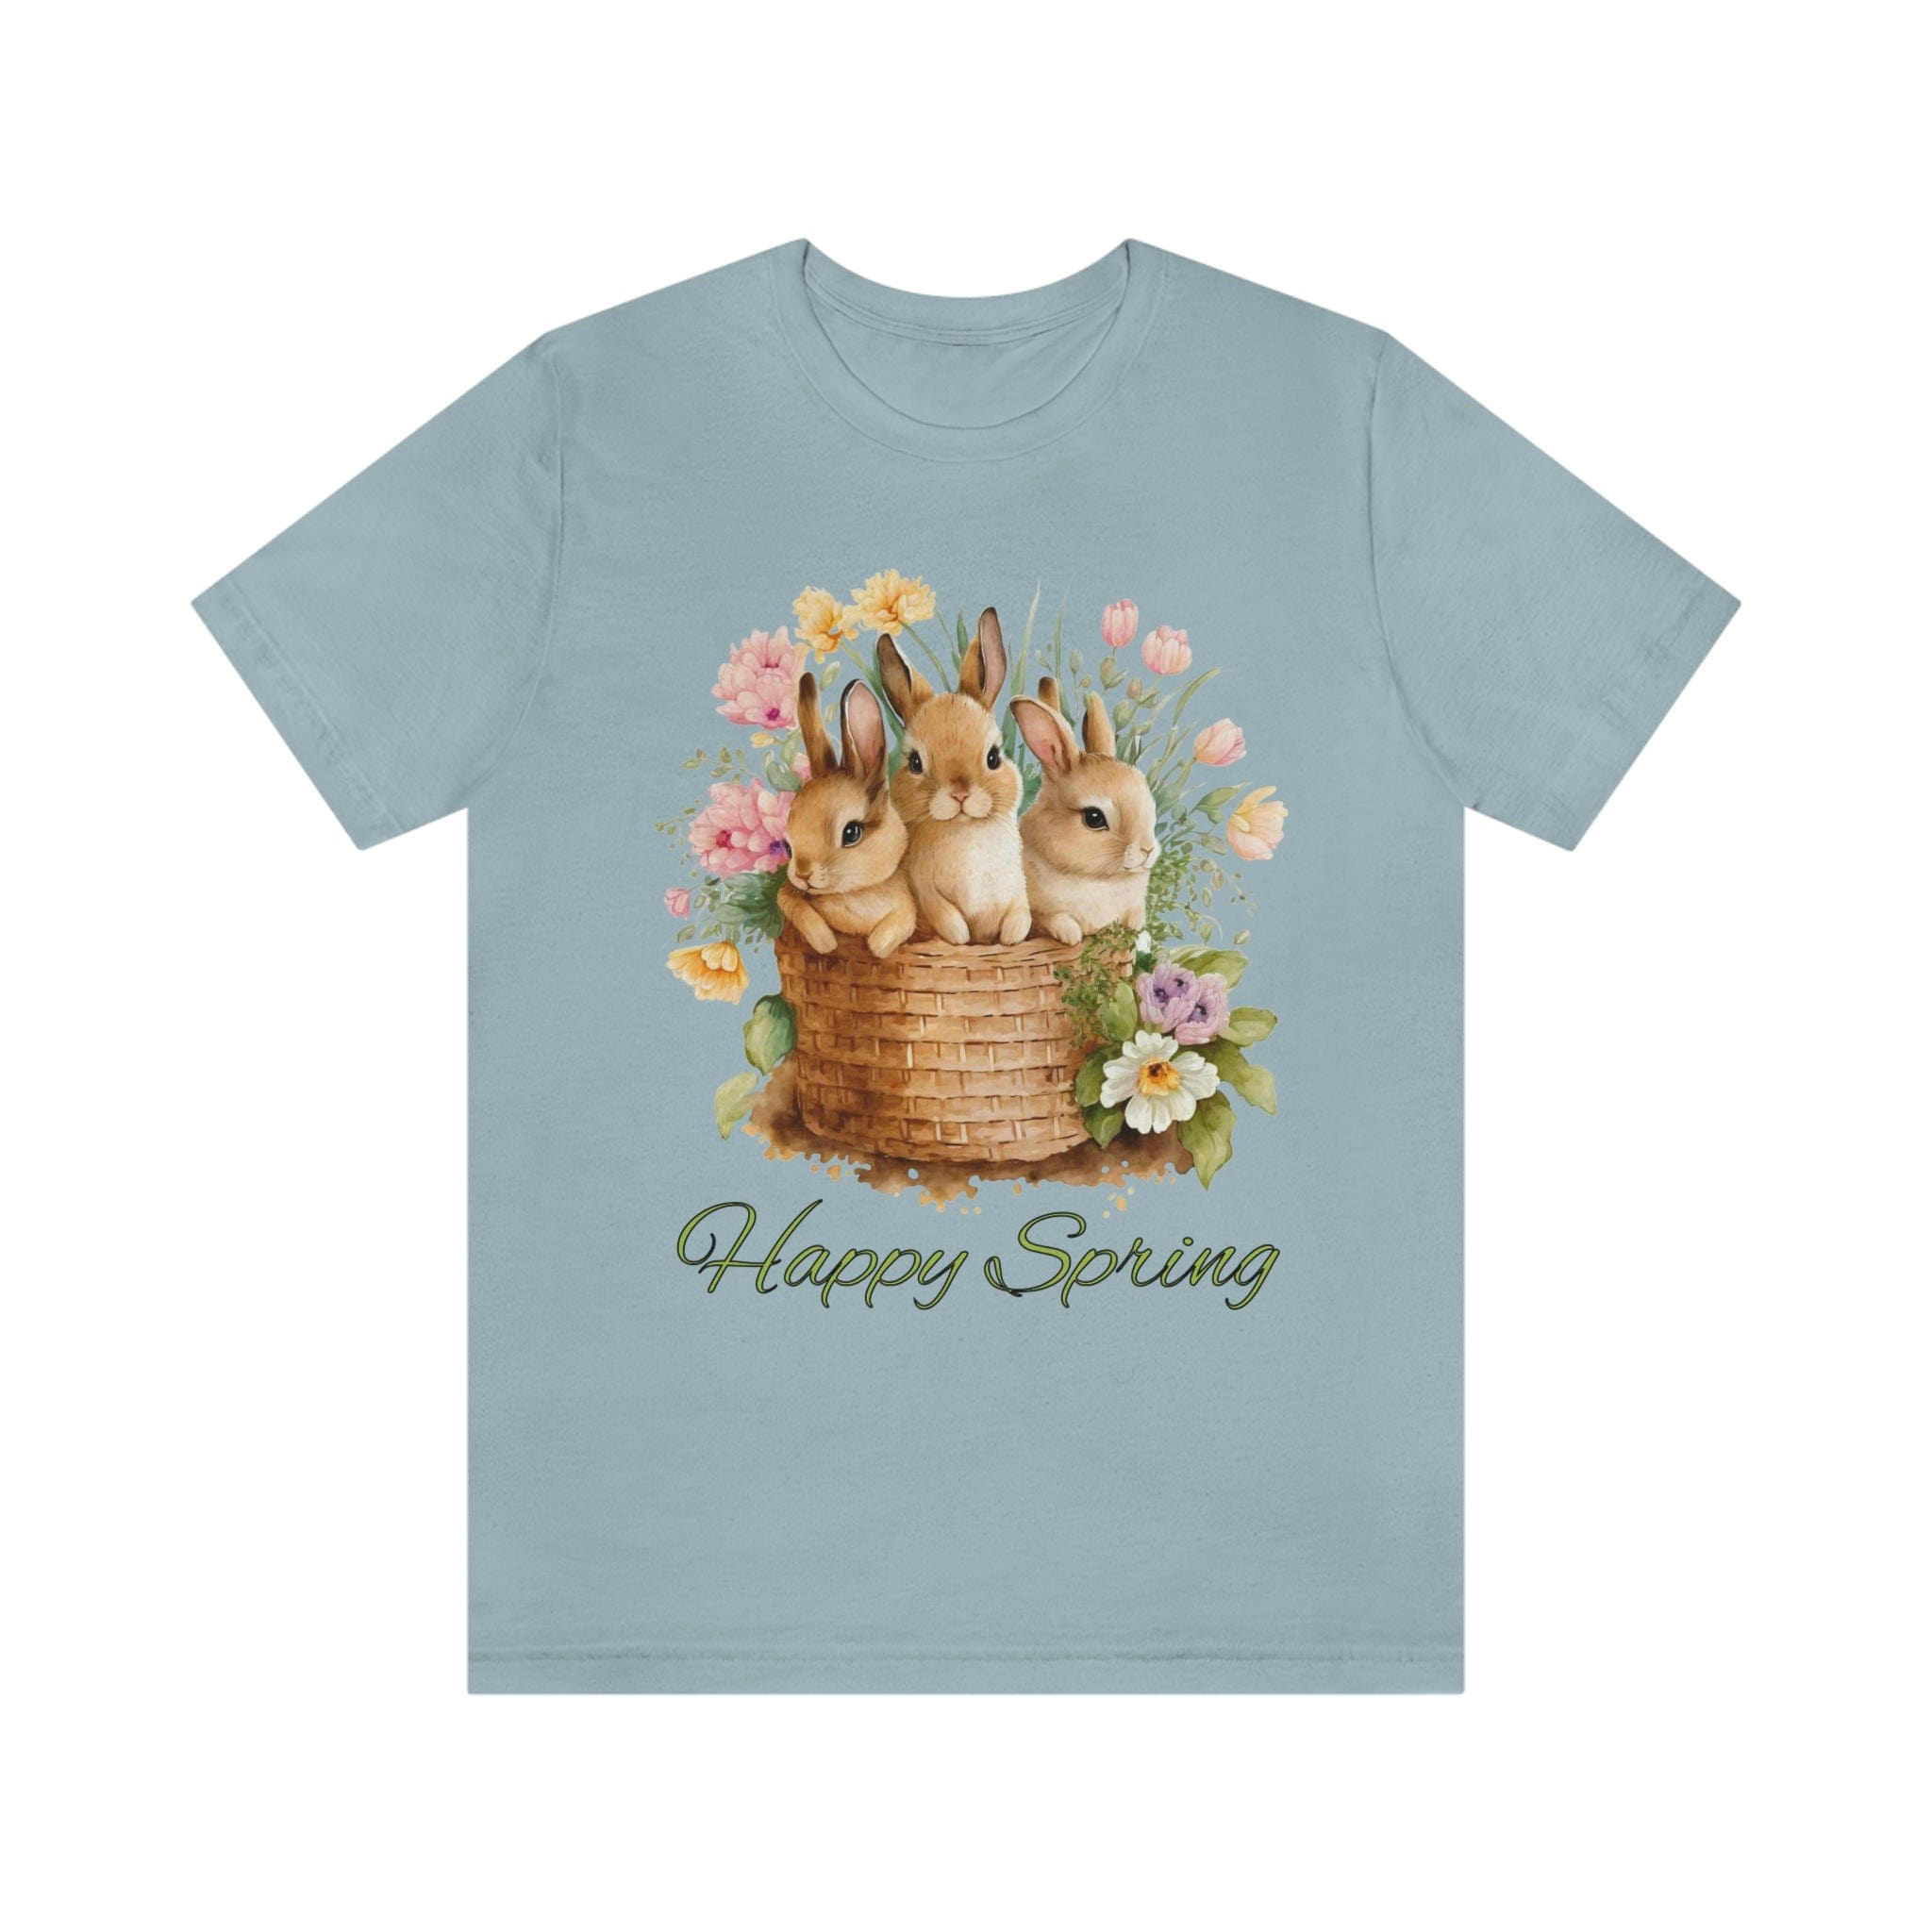 Printify T-Shirt Woman's shirt, Happy Spring Shirt, Bunnies Shirt, Easter Shirt, Unisex Short Sleeve Tee, Graphic Tee, Gift for Her, Free Shipping